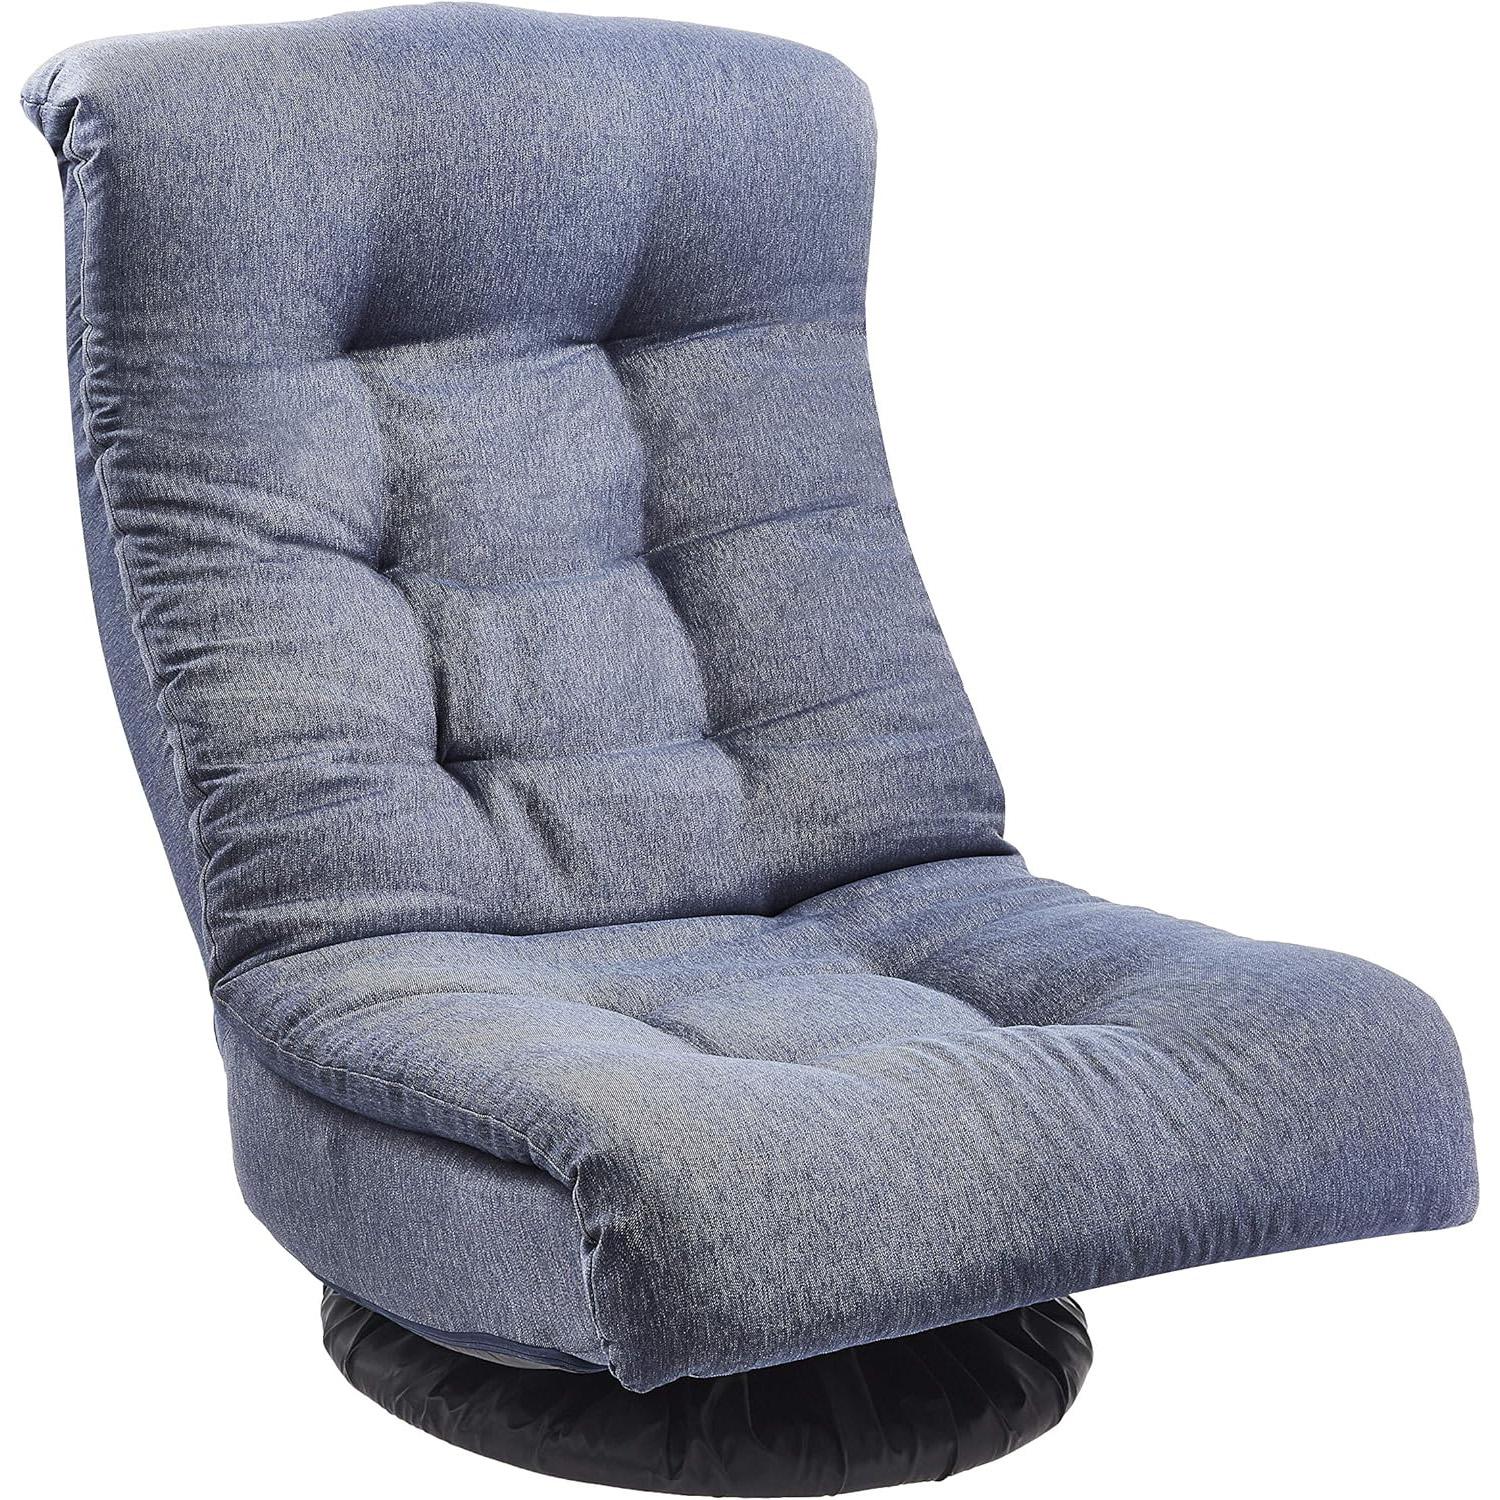 Amazon Basics Swivel Foam Lounge Chair for $98.77 Shipped